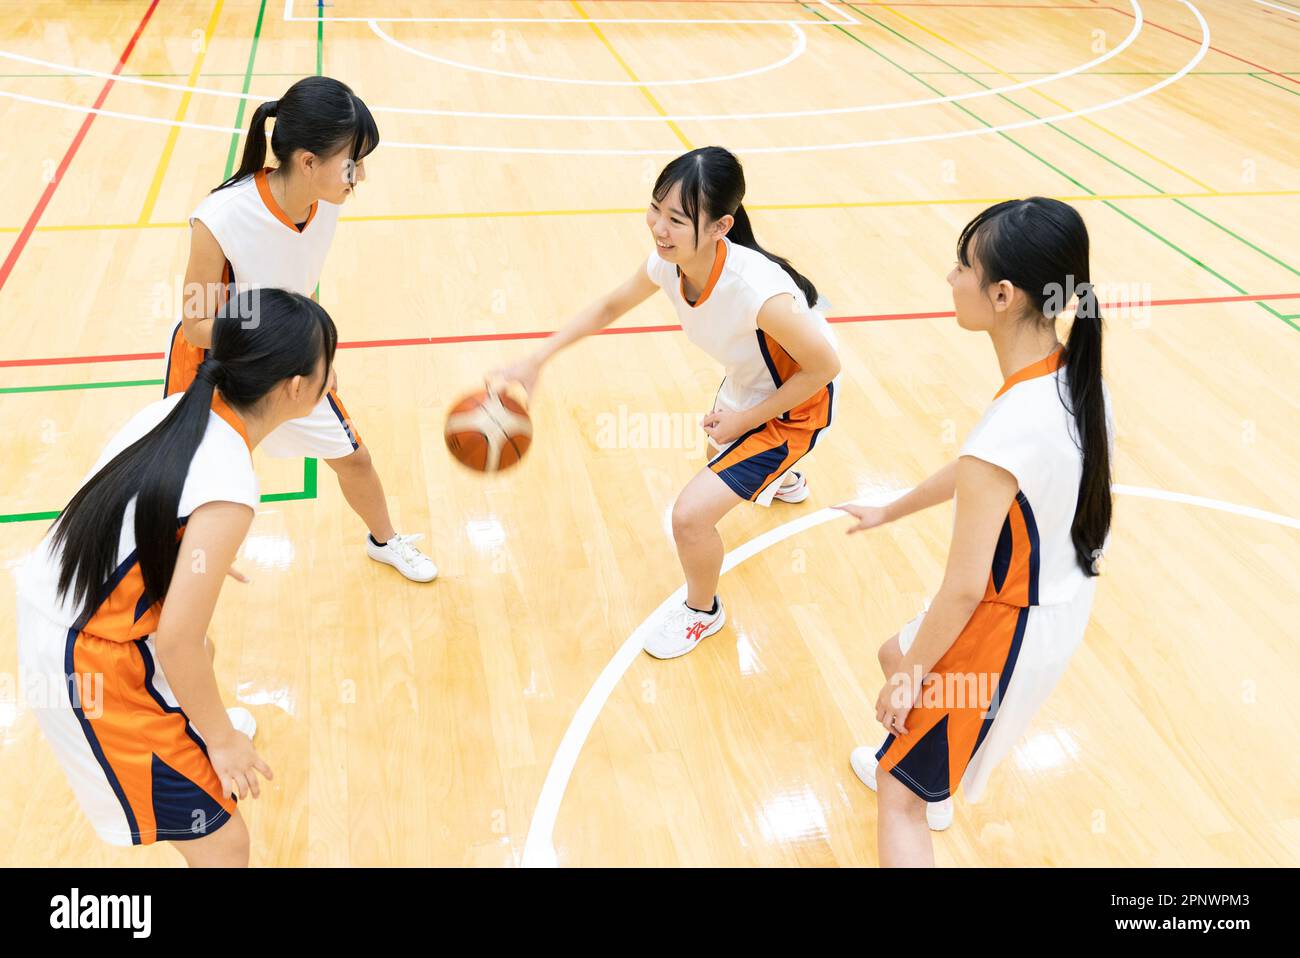 High school students playing basketball Stock Photo